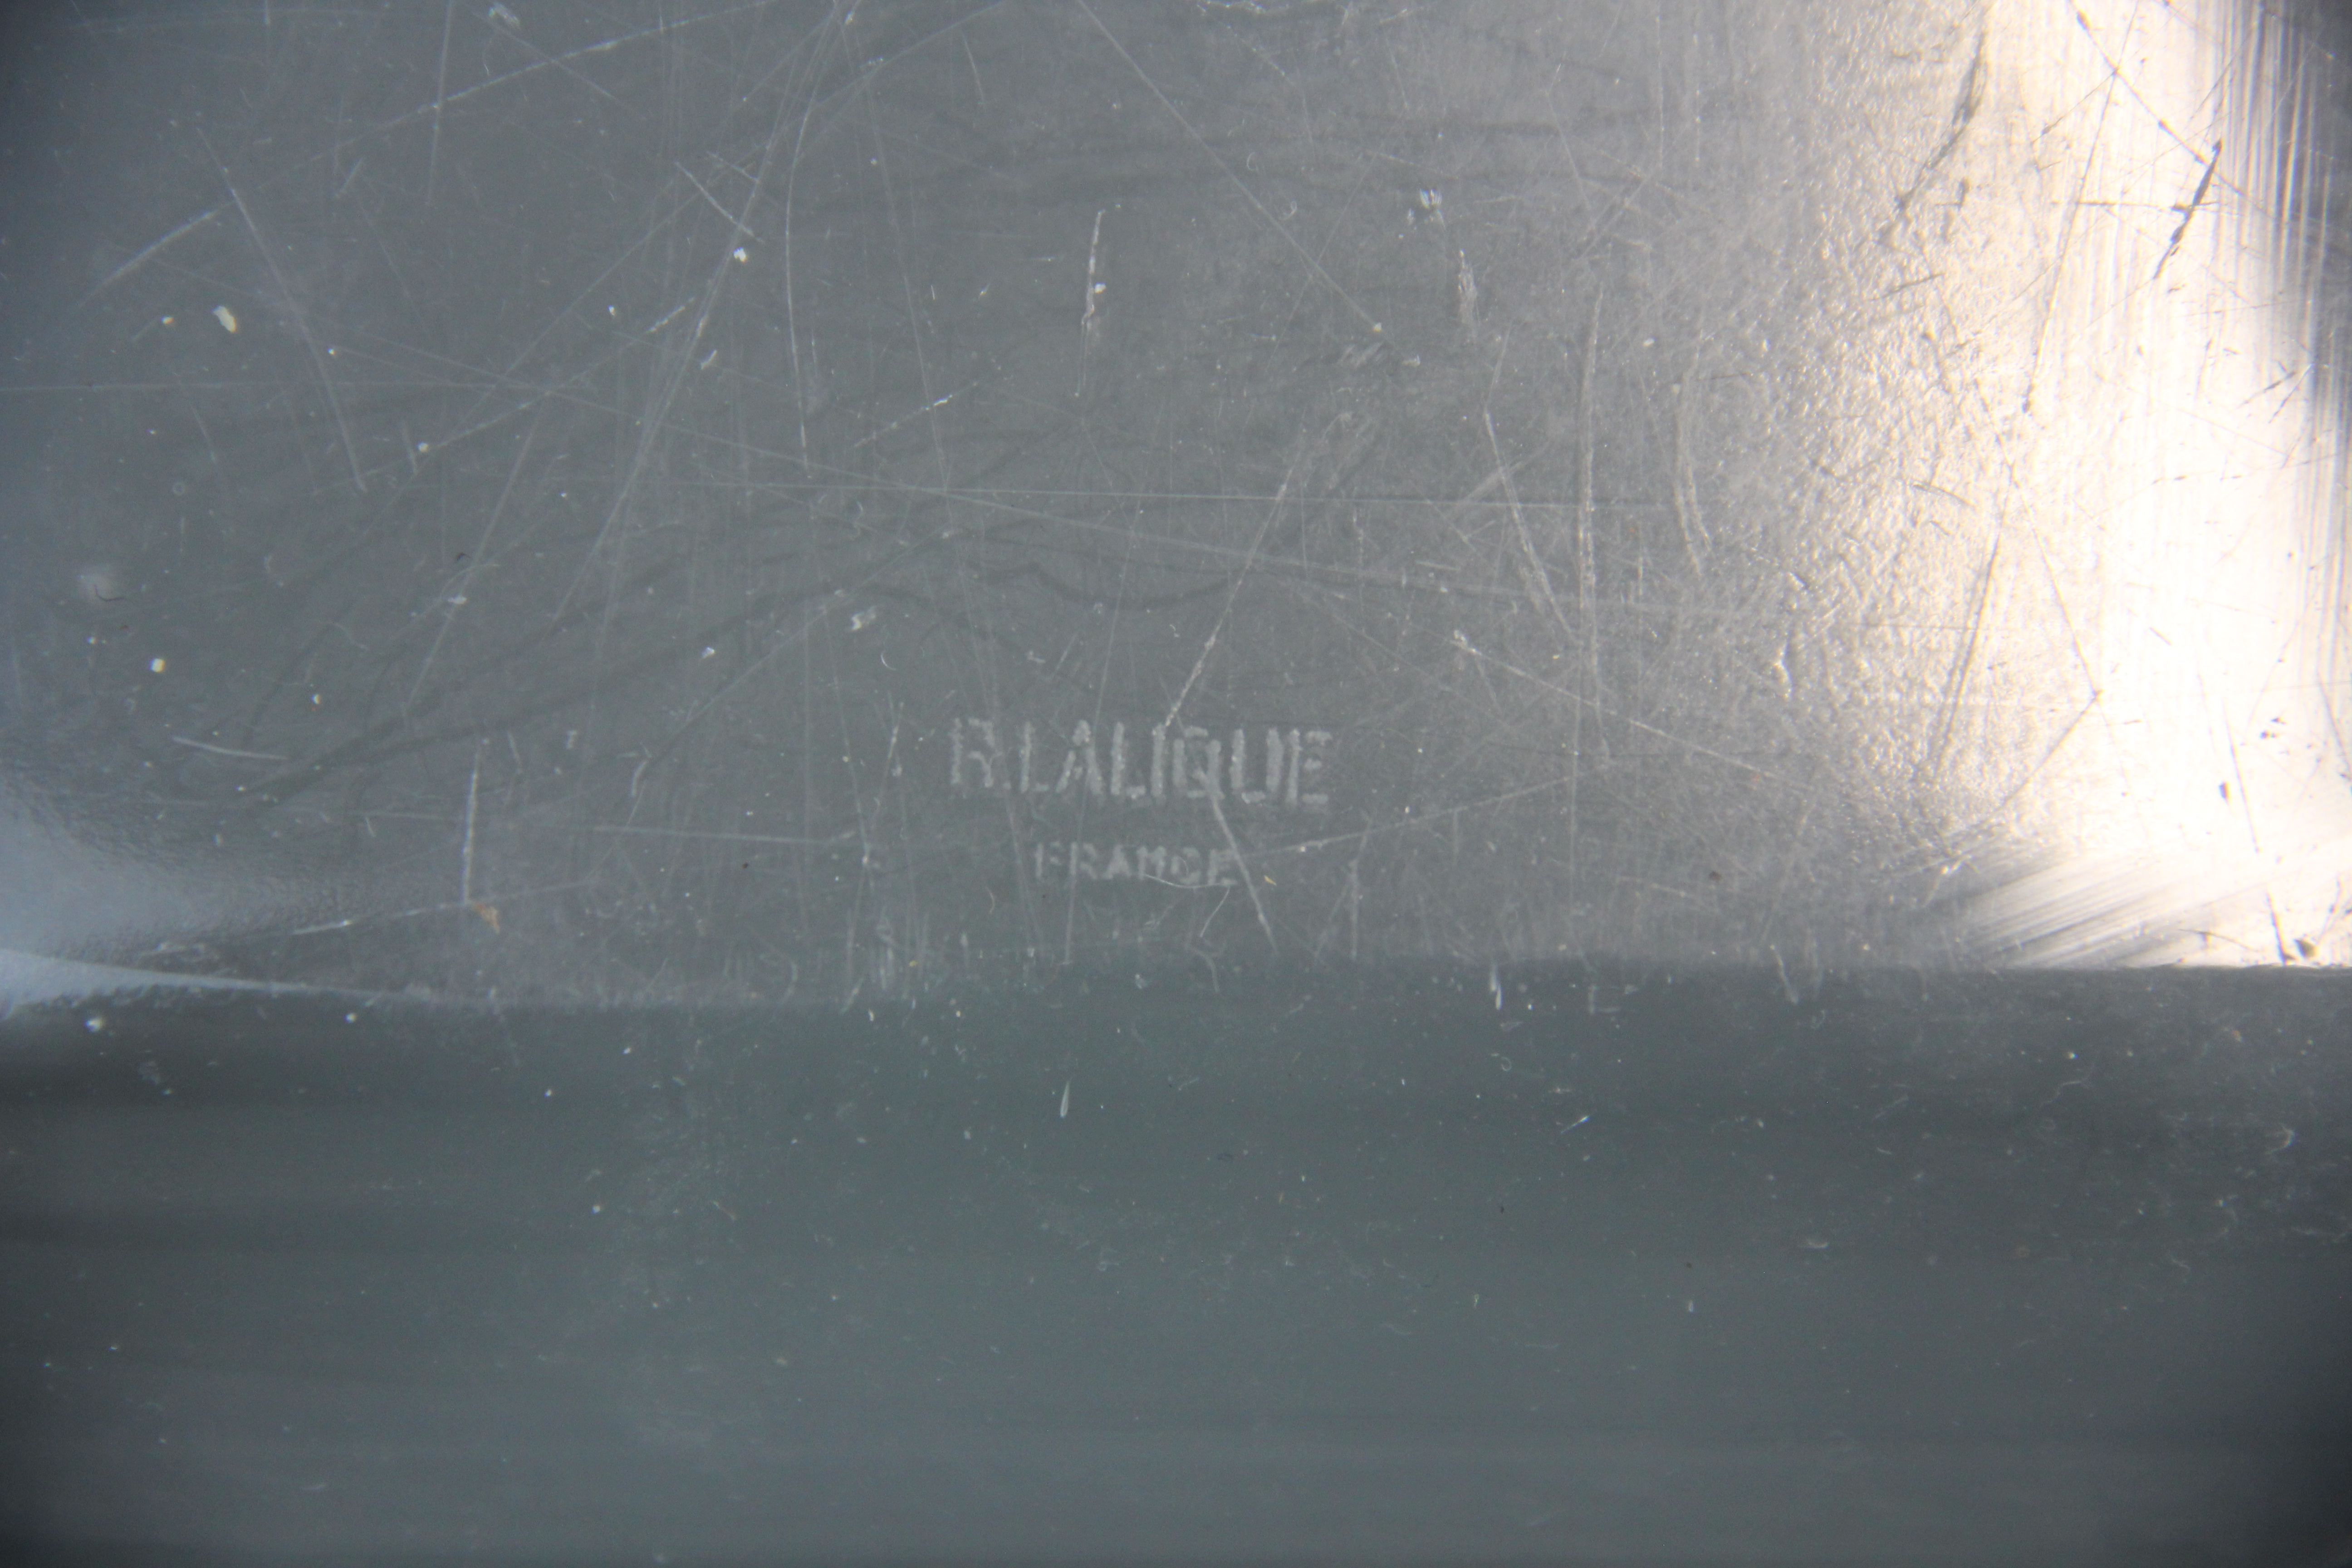 A Lalique crystal Art Deco style dish acid etched R. Lalique France, 25.5 x 25.5cm. - Image 2 of 2